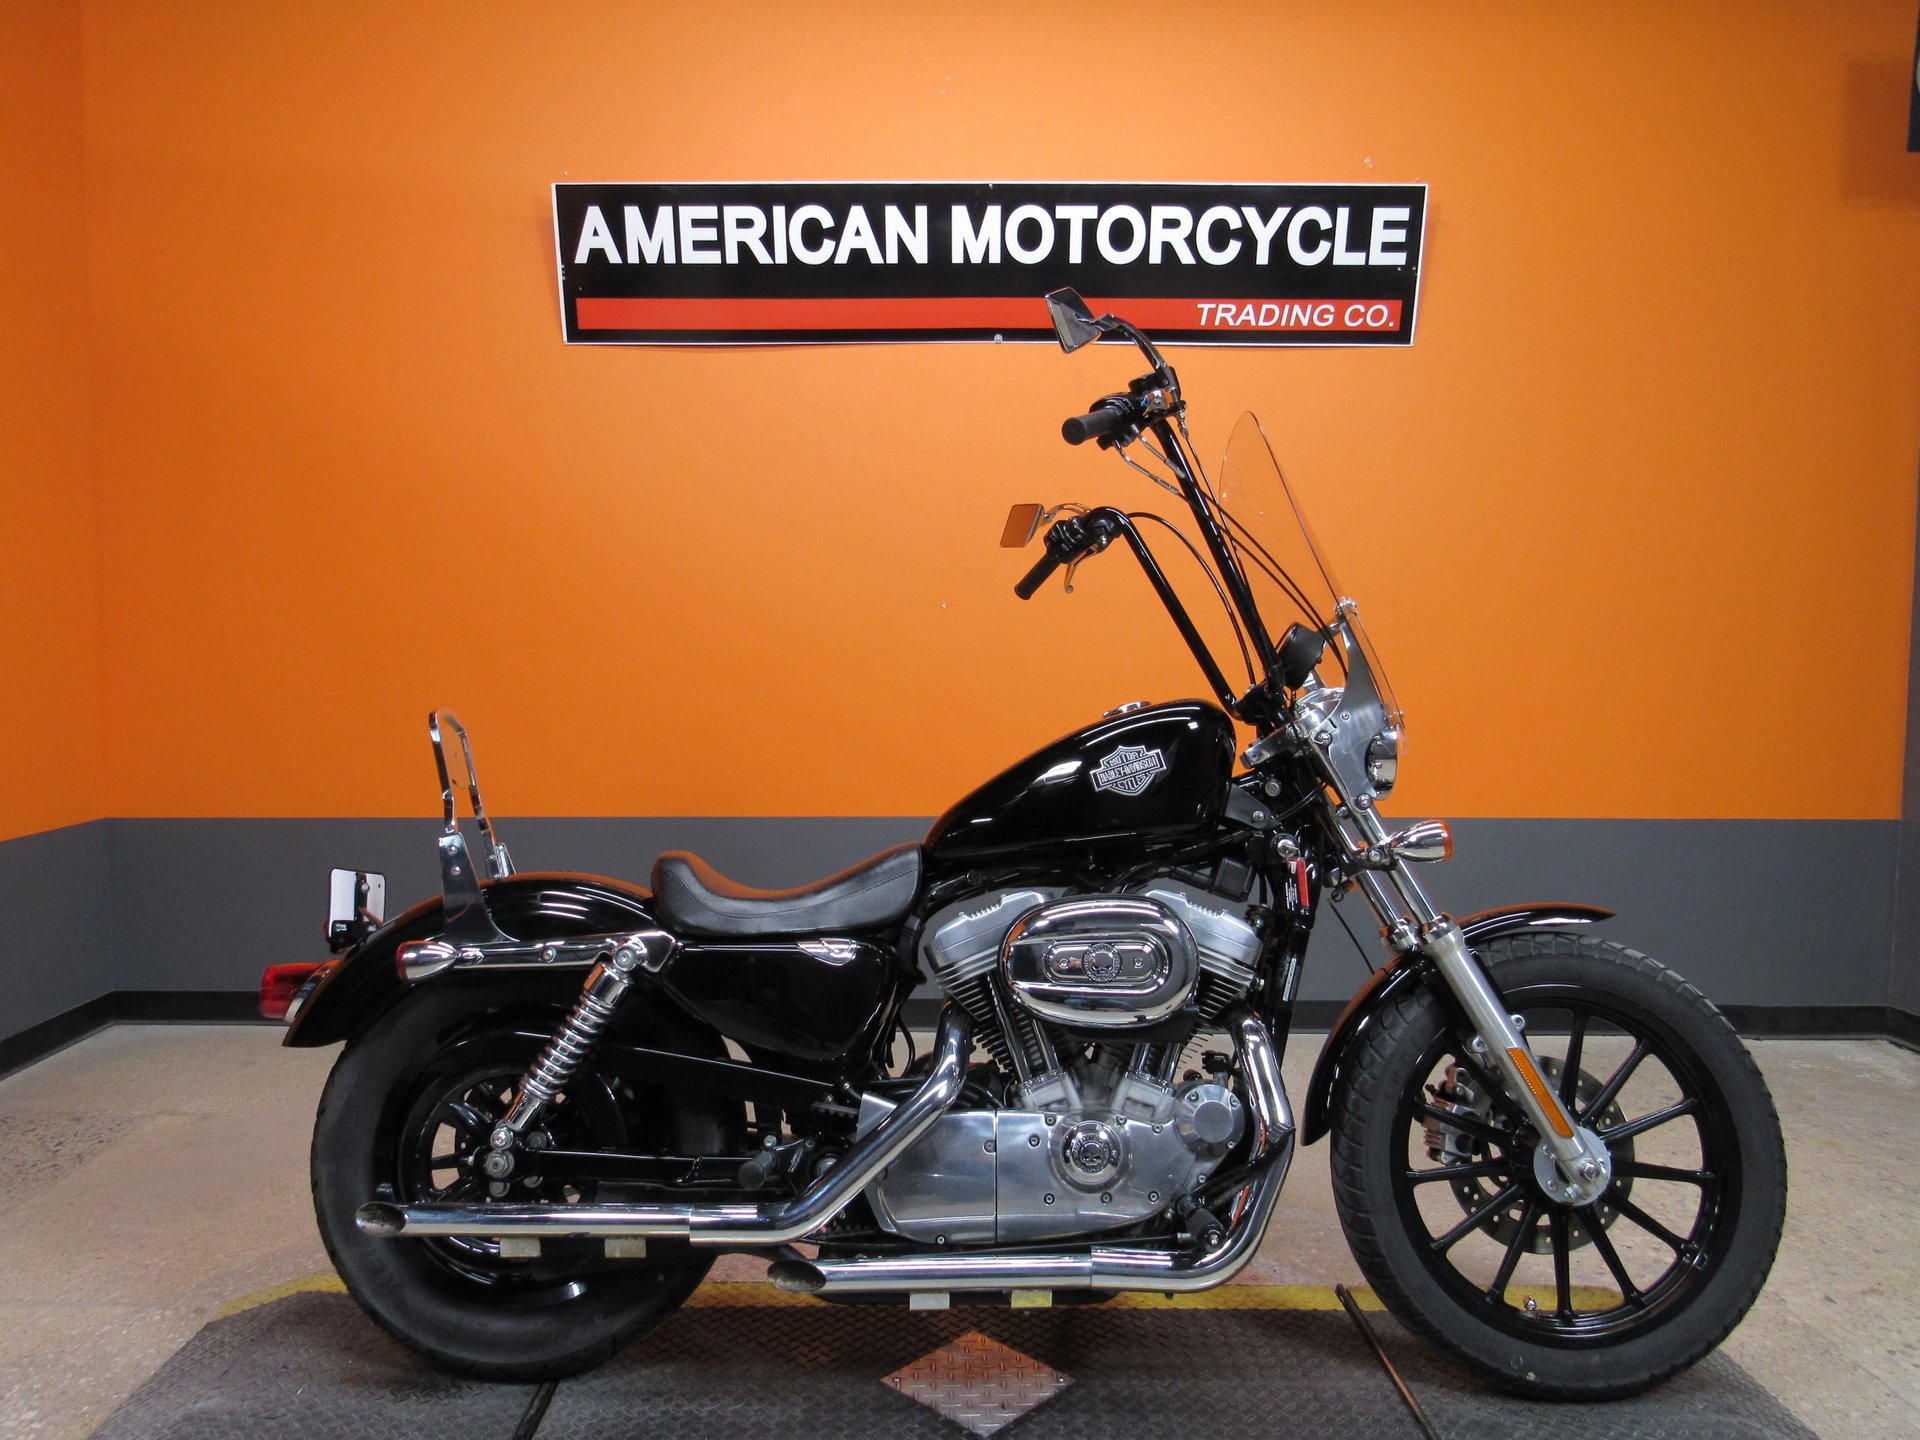 2006 Harley-Davidson Sportster 883 | American Motorcycle Trading Company -  Used Harley Davidson Motorcycles